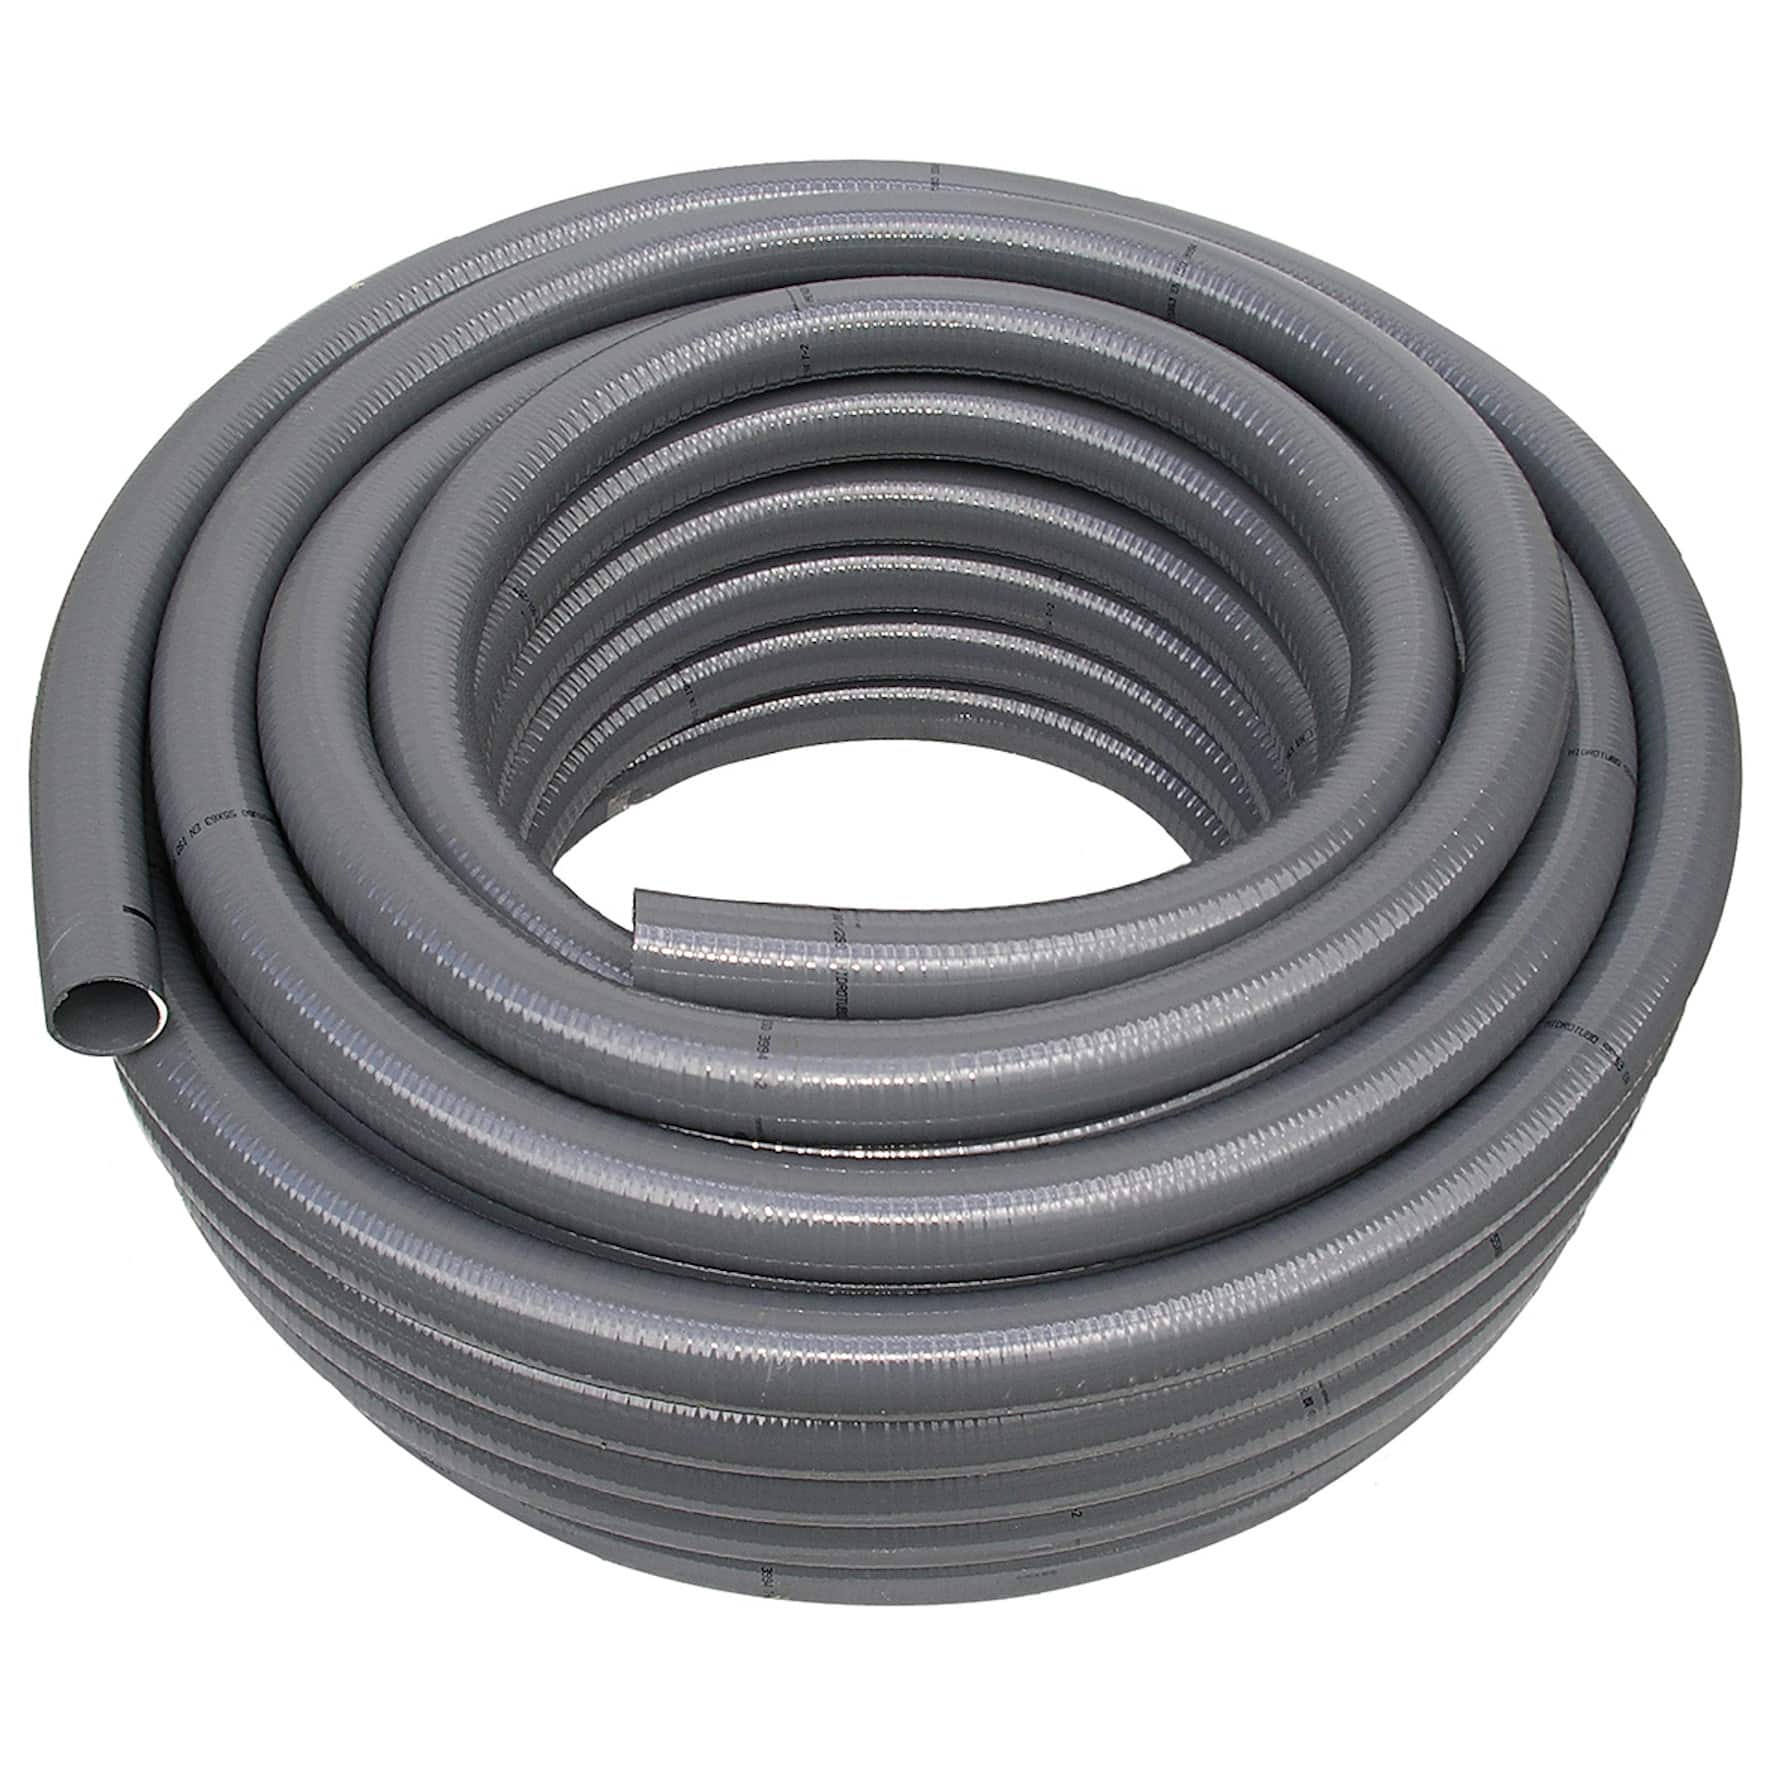 X pvc. Пруток PVC-U. Semi flexible Pipes. Semi rigid Pipes.